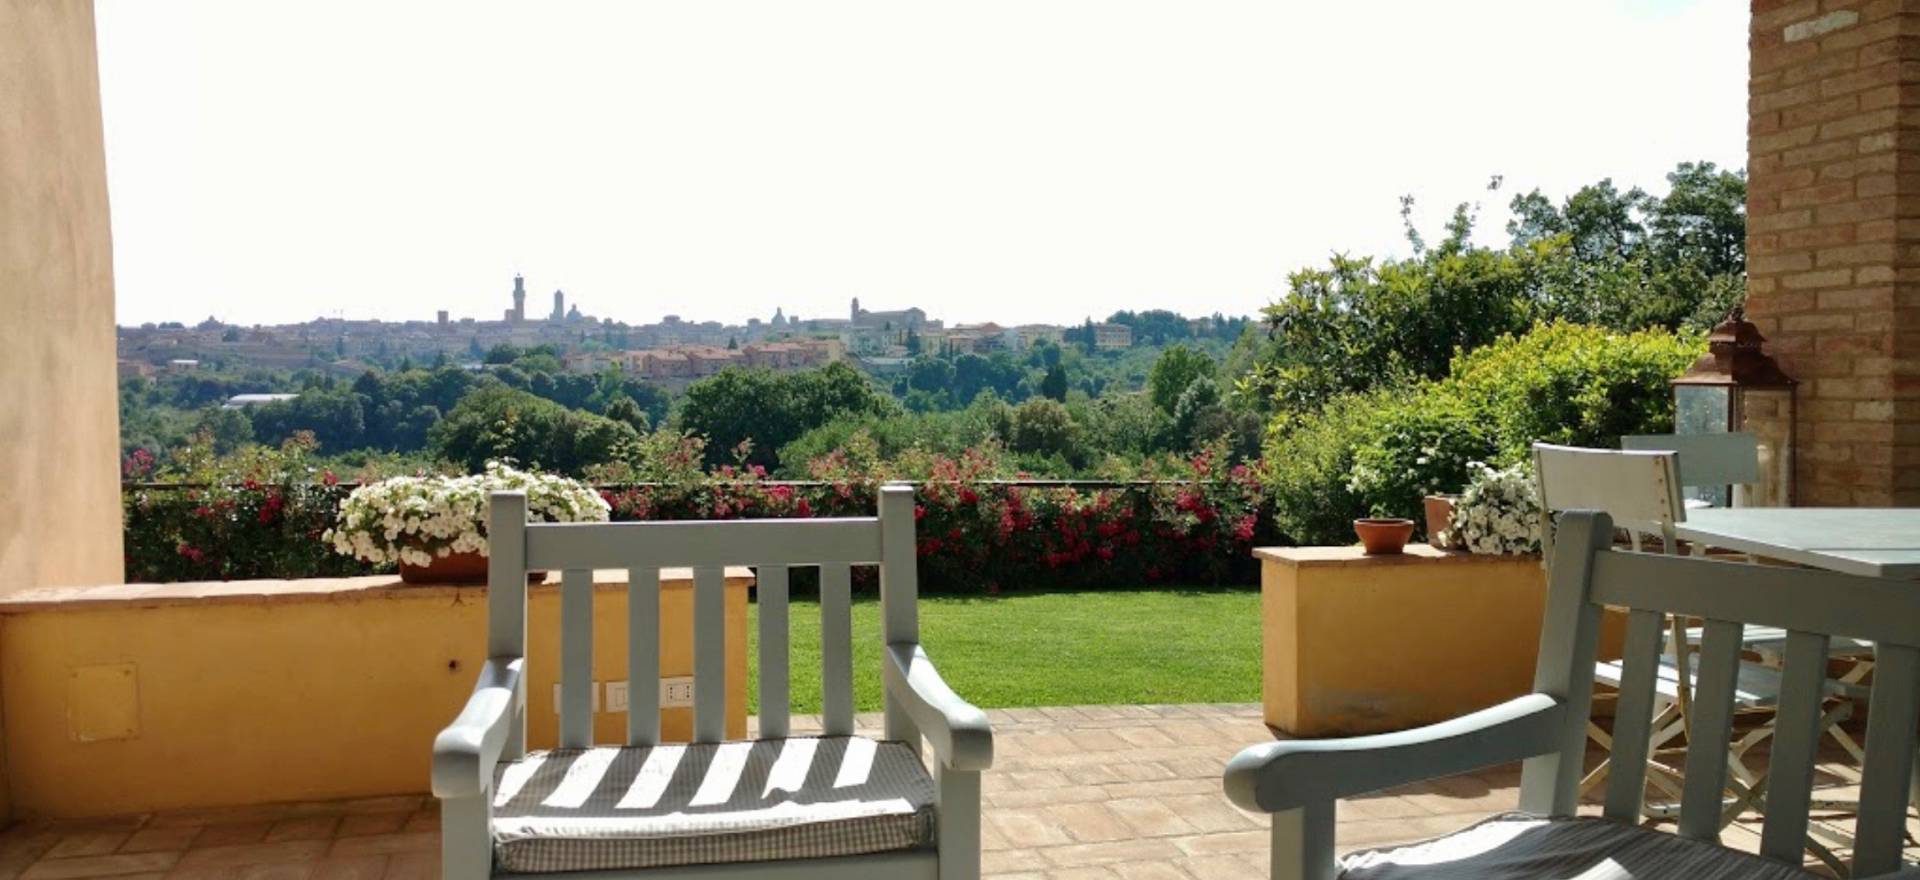 Elegante agriturismo met fantastisch uitzicht op Siena